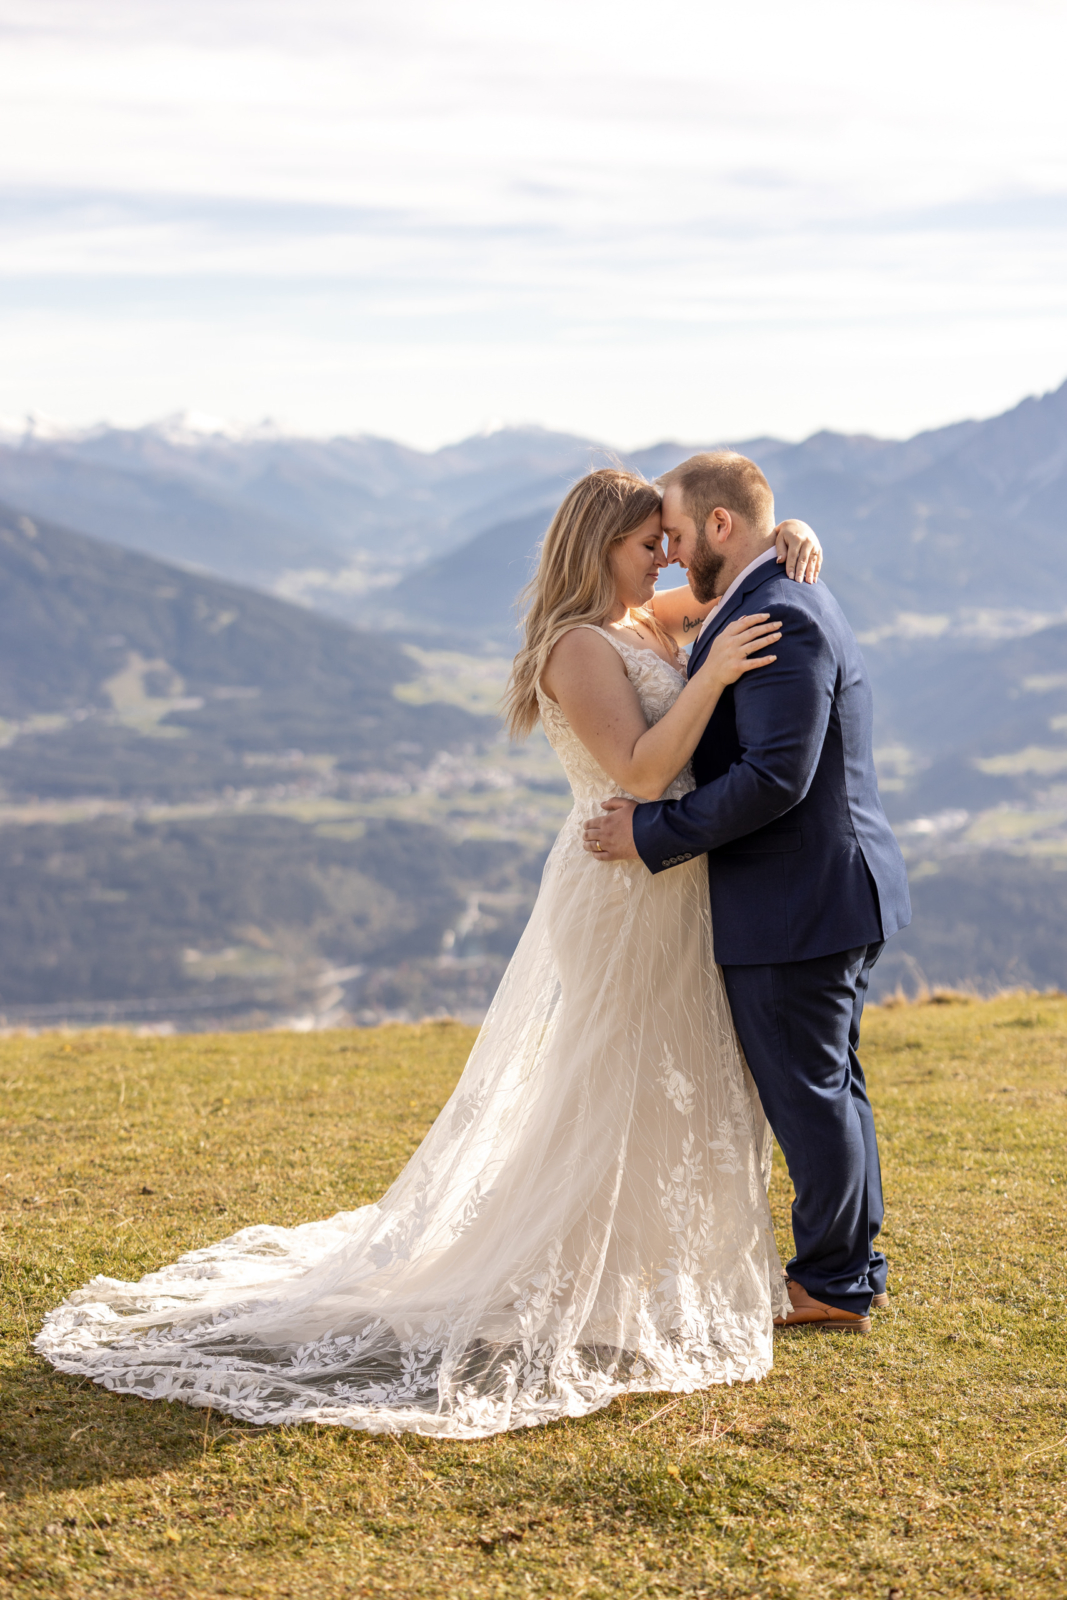 Wedding Photos in the Mountains, Innsbruck